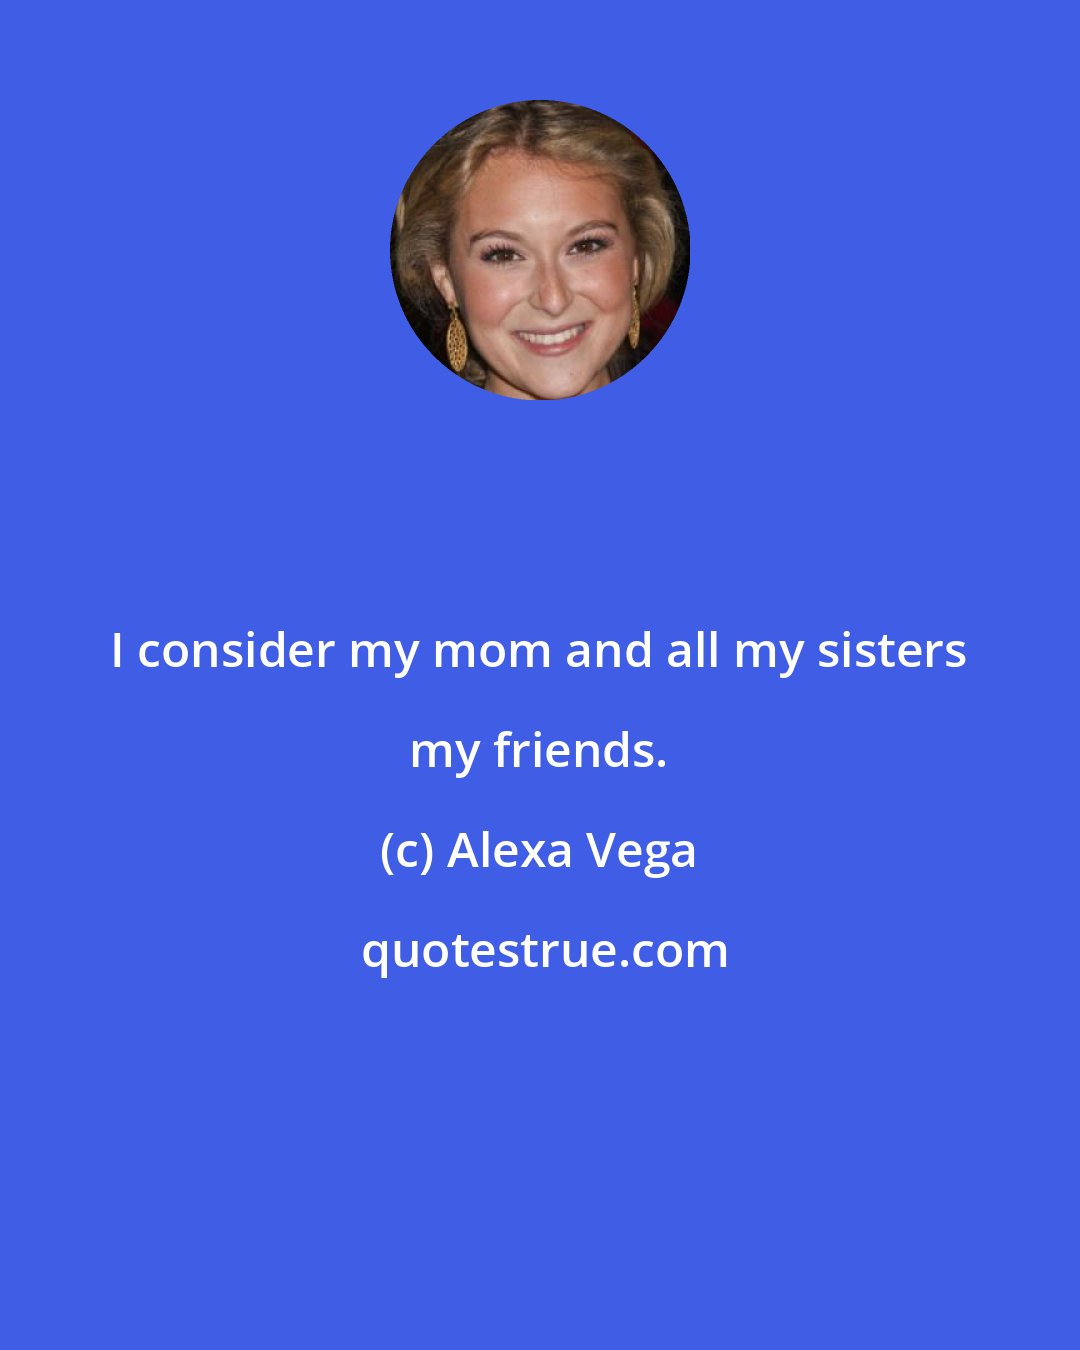 Alexa Vega: I consider my mom and all my sisters my friends.